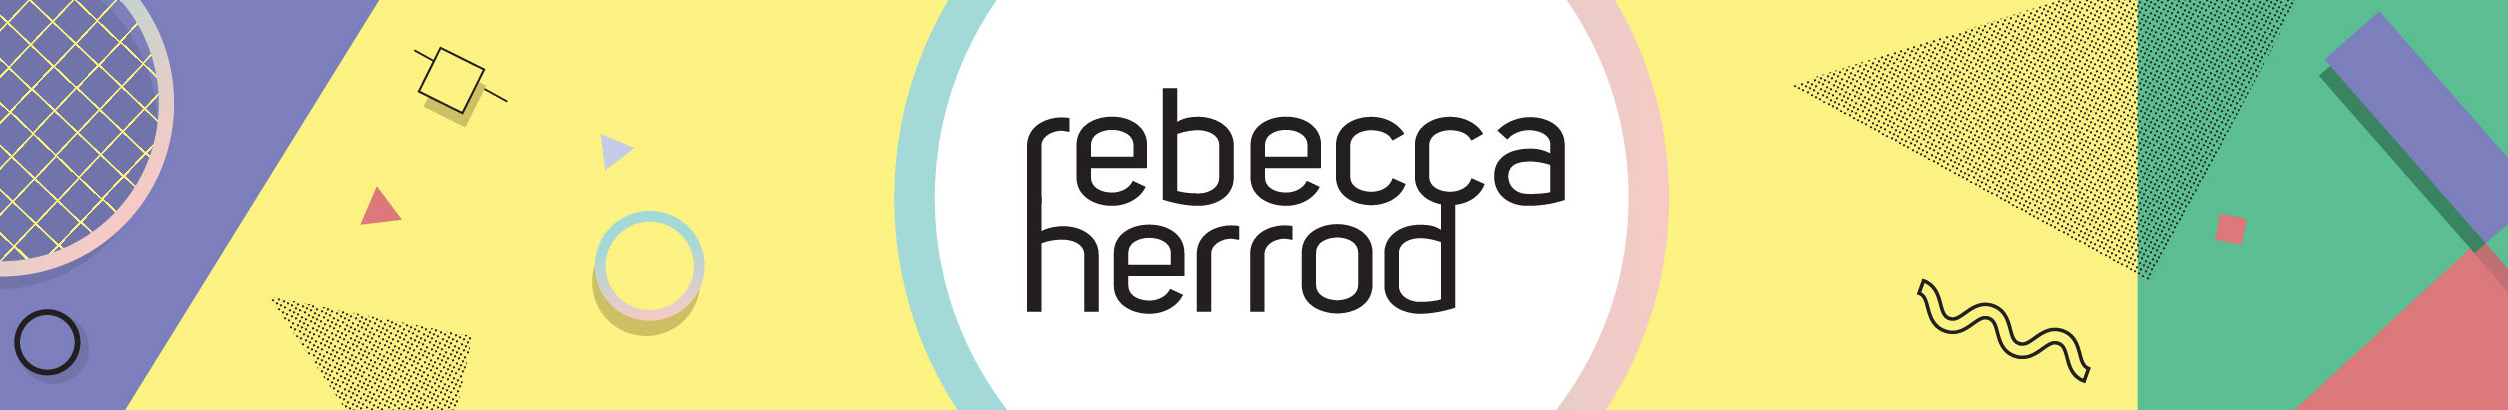 Rebecca Herrods profilbanner